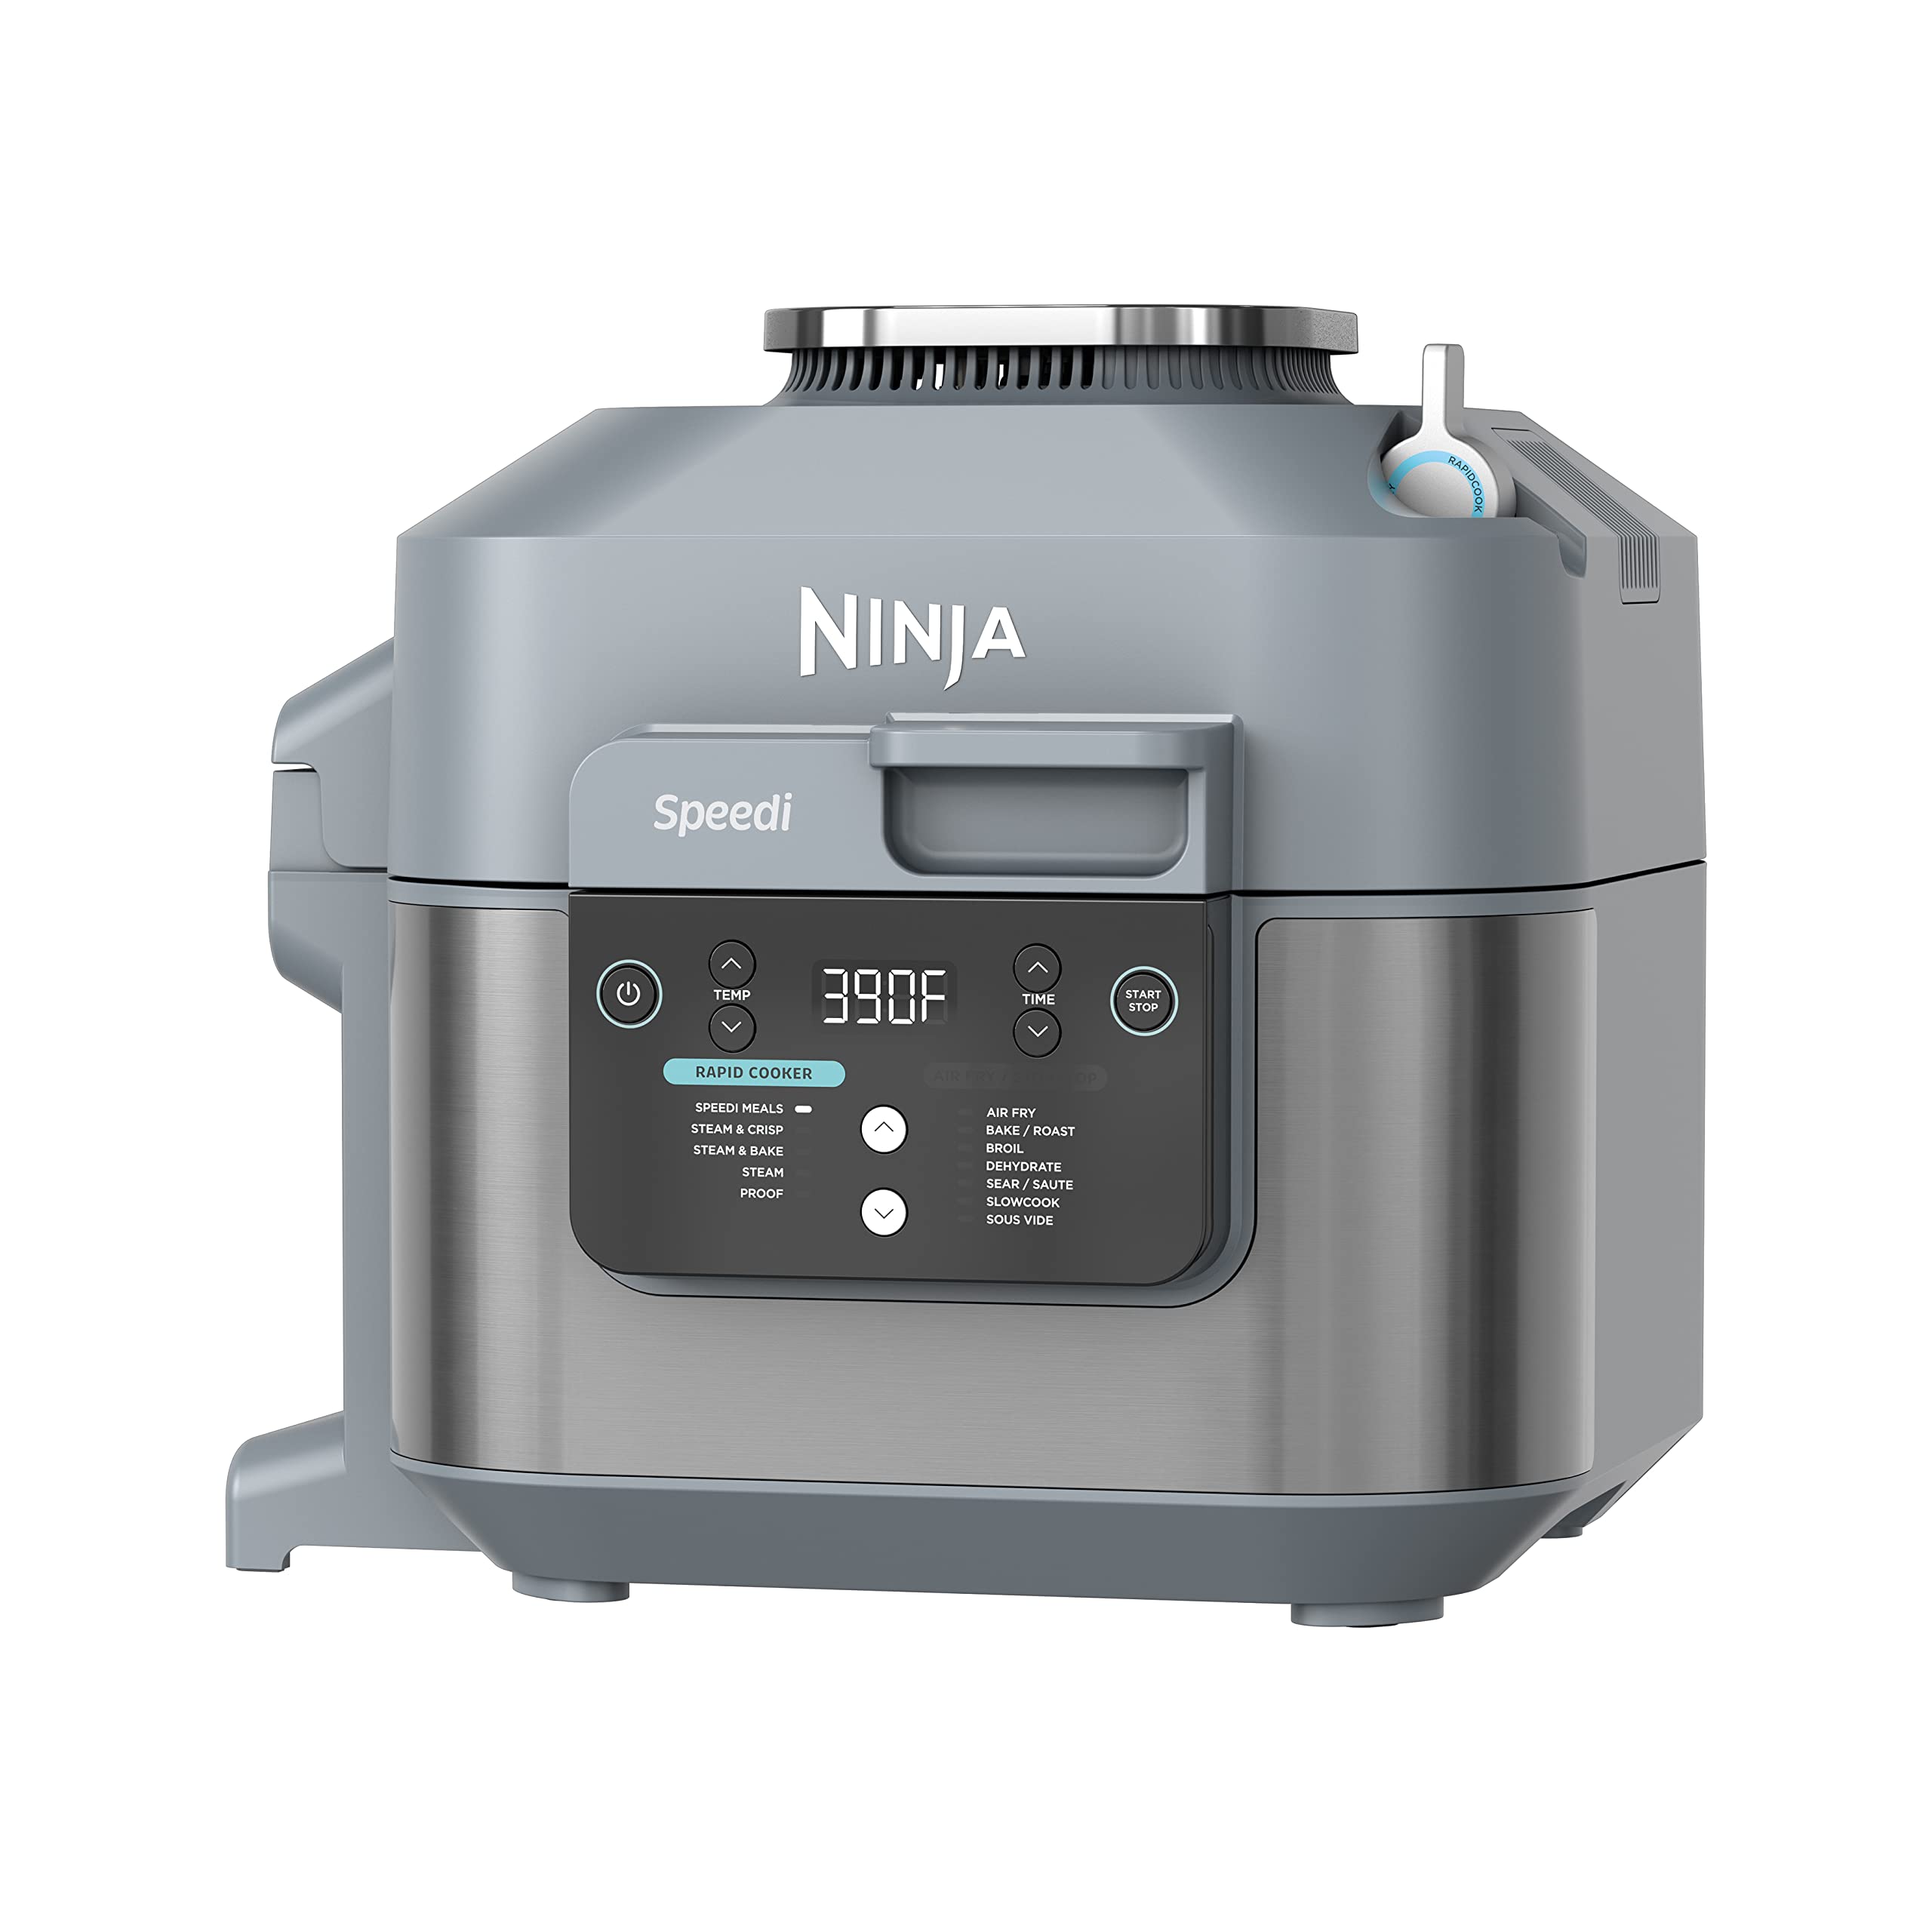 Ninja SF301 Speedi Rapid Cooker Amp Air Fryer 25370 